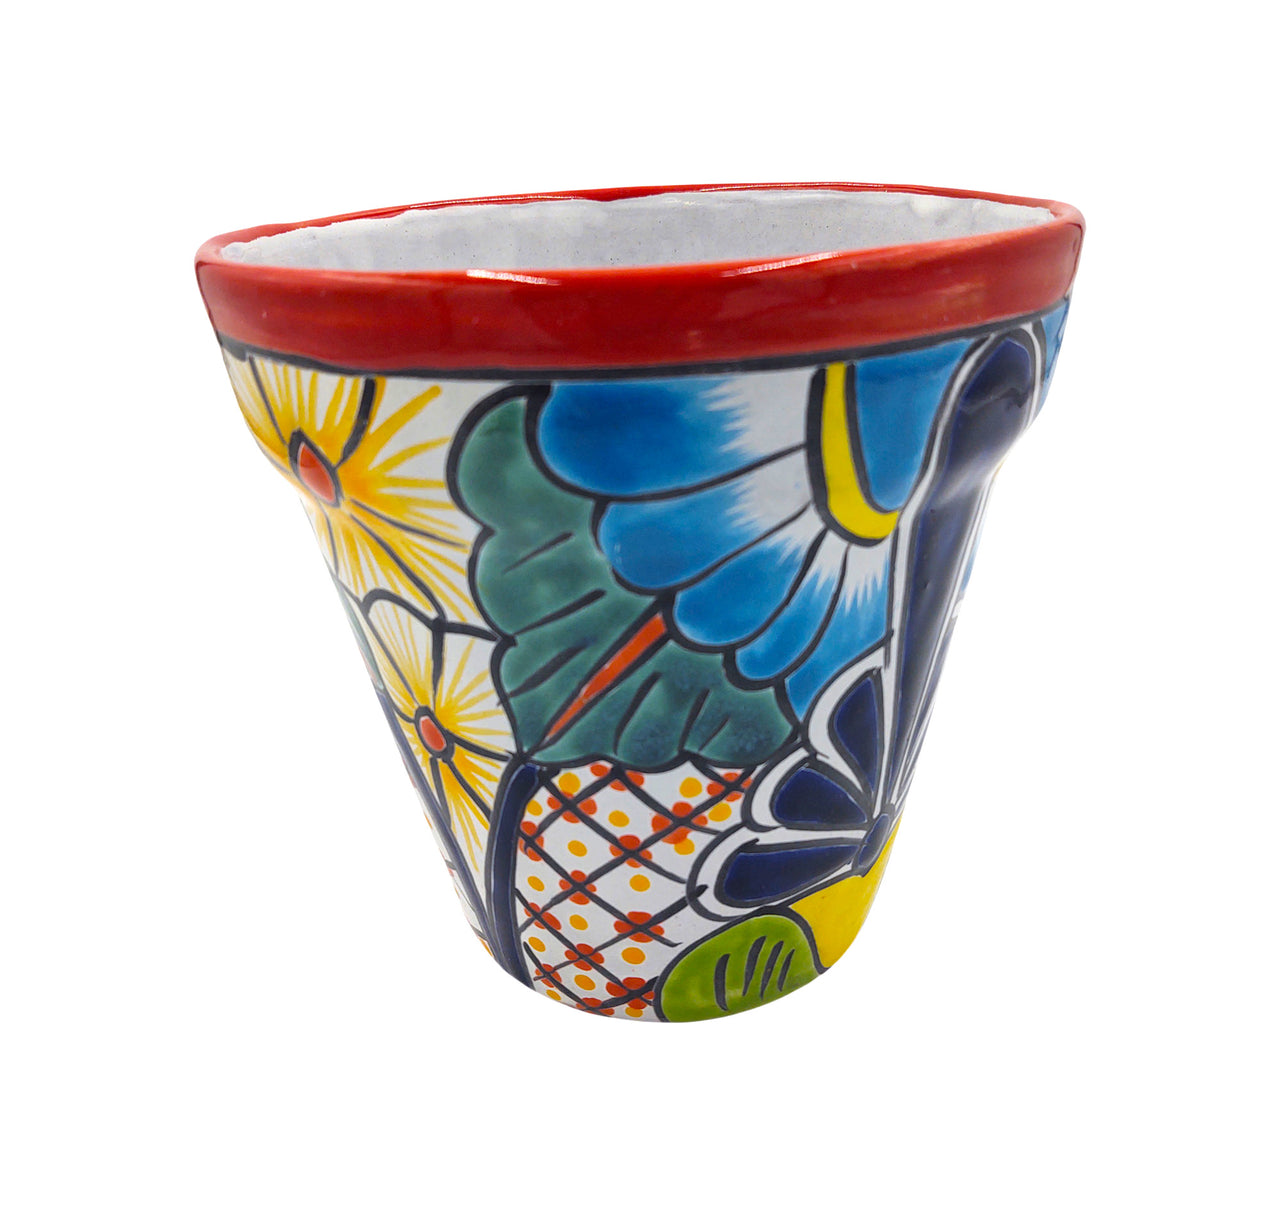 Mexican Talavera Hand Painted Planter Pot (Maceta Ranchera #20) - Traditional Ceramic Garden & Home Décor - Red Trim